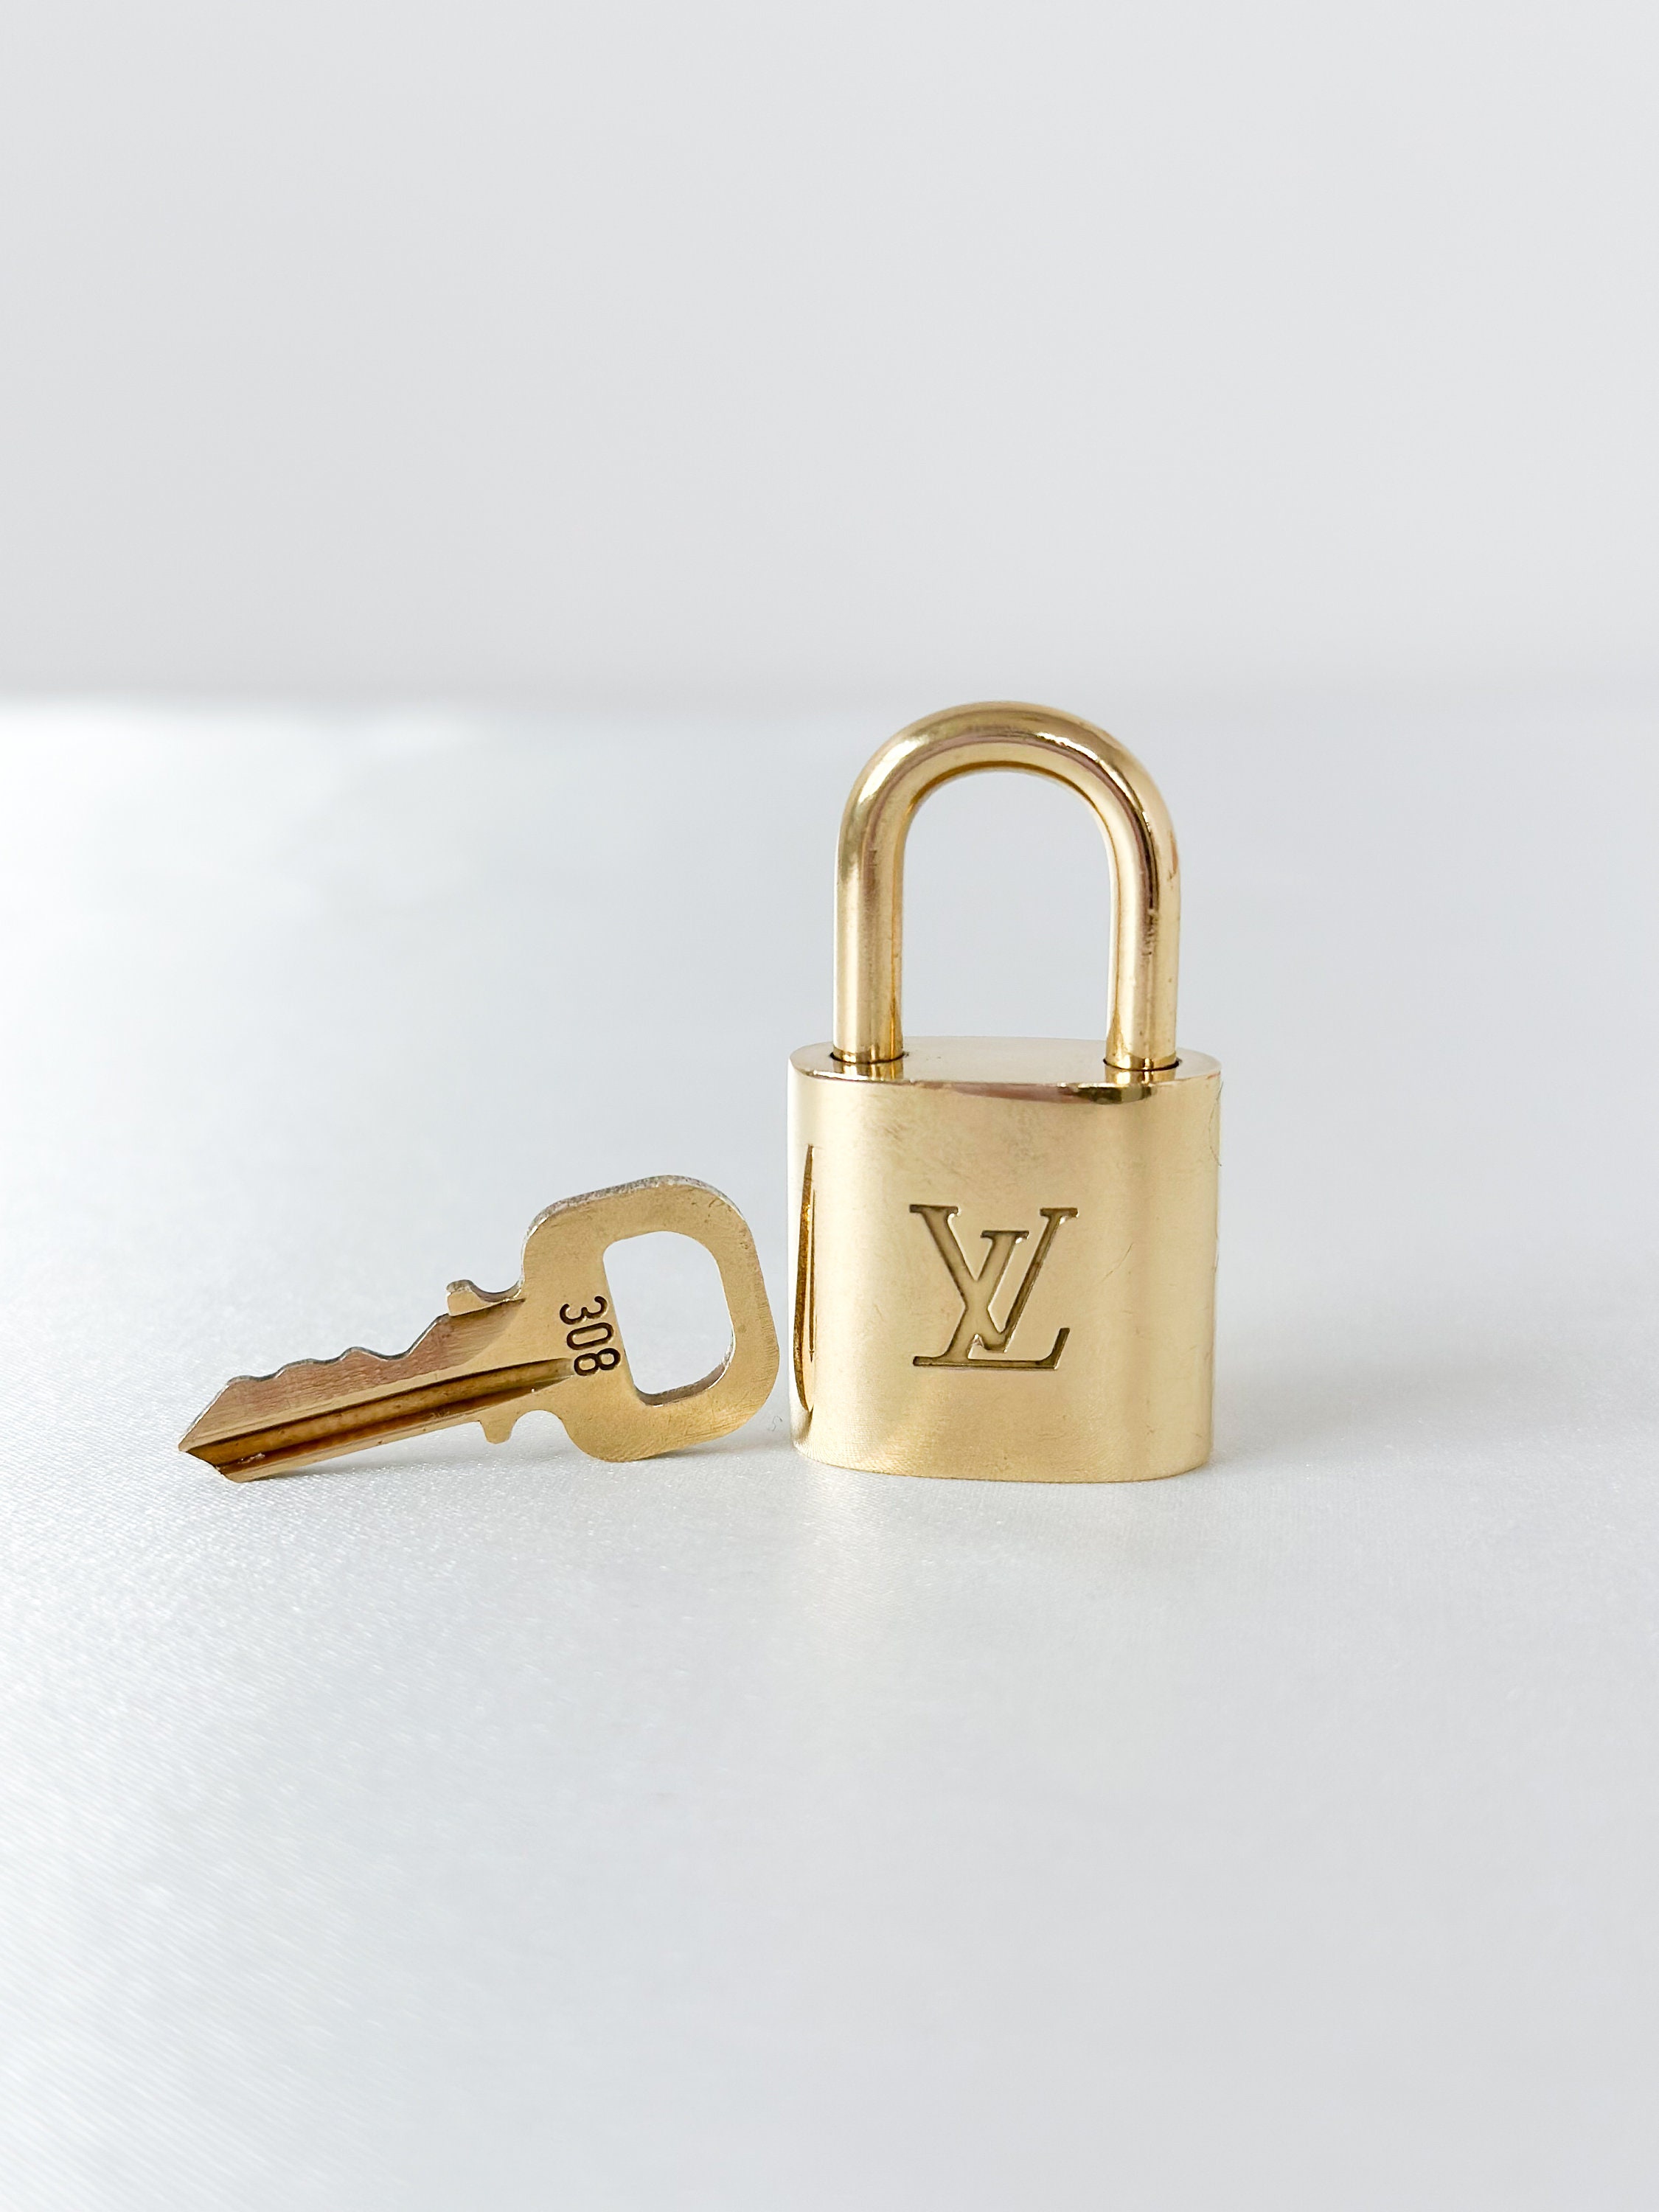 Louis Vuitton Louis Vuitton Gunmetal Grey Padlock & 2 Keys